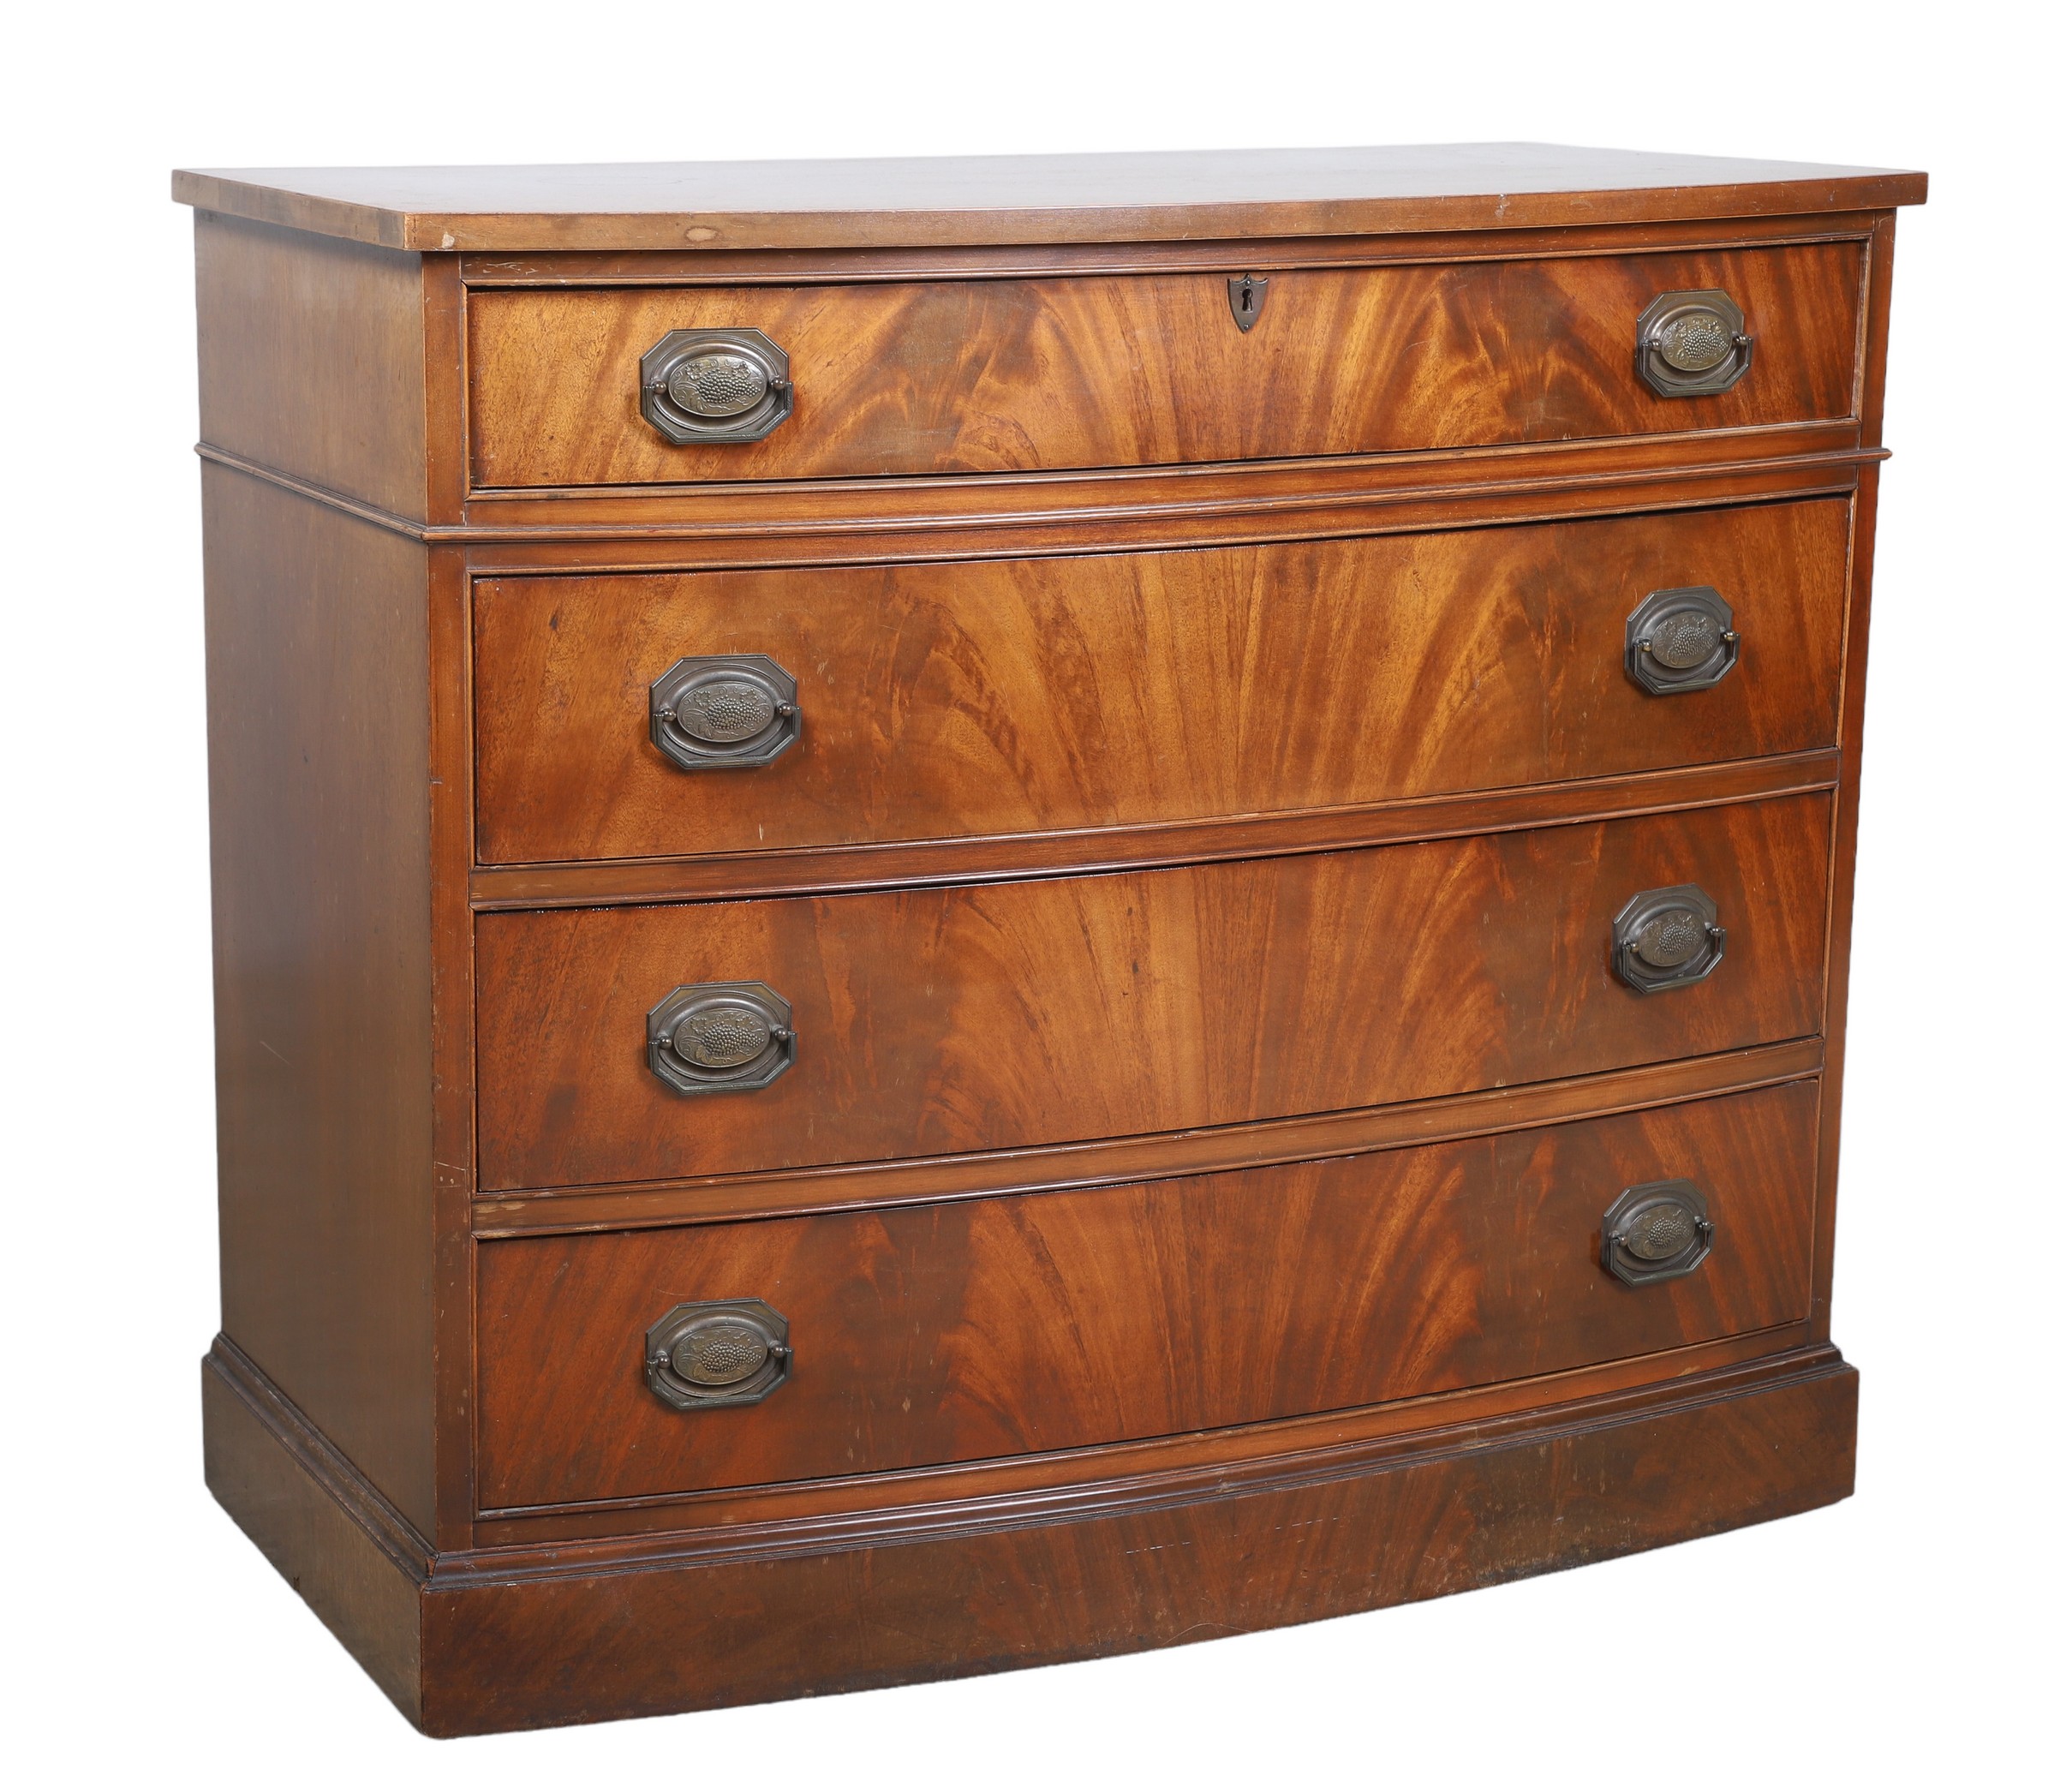 Mahogany chest of drawers, 4 drawers,